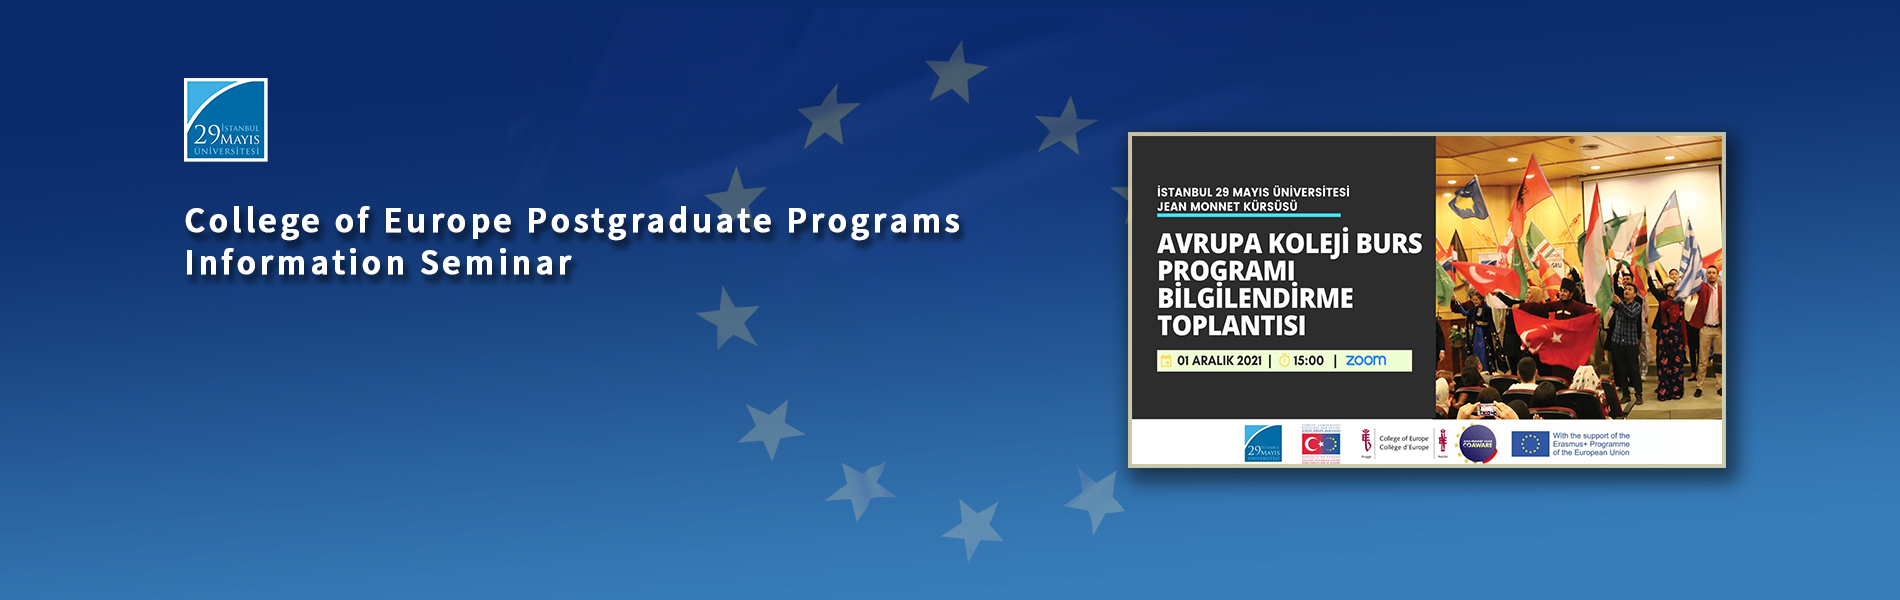 College of Europe Postgraduate Programs Information Seminar